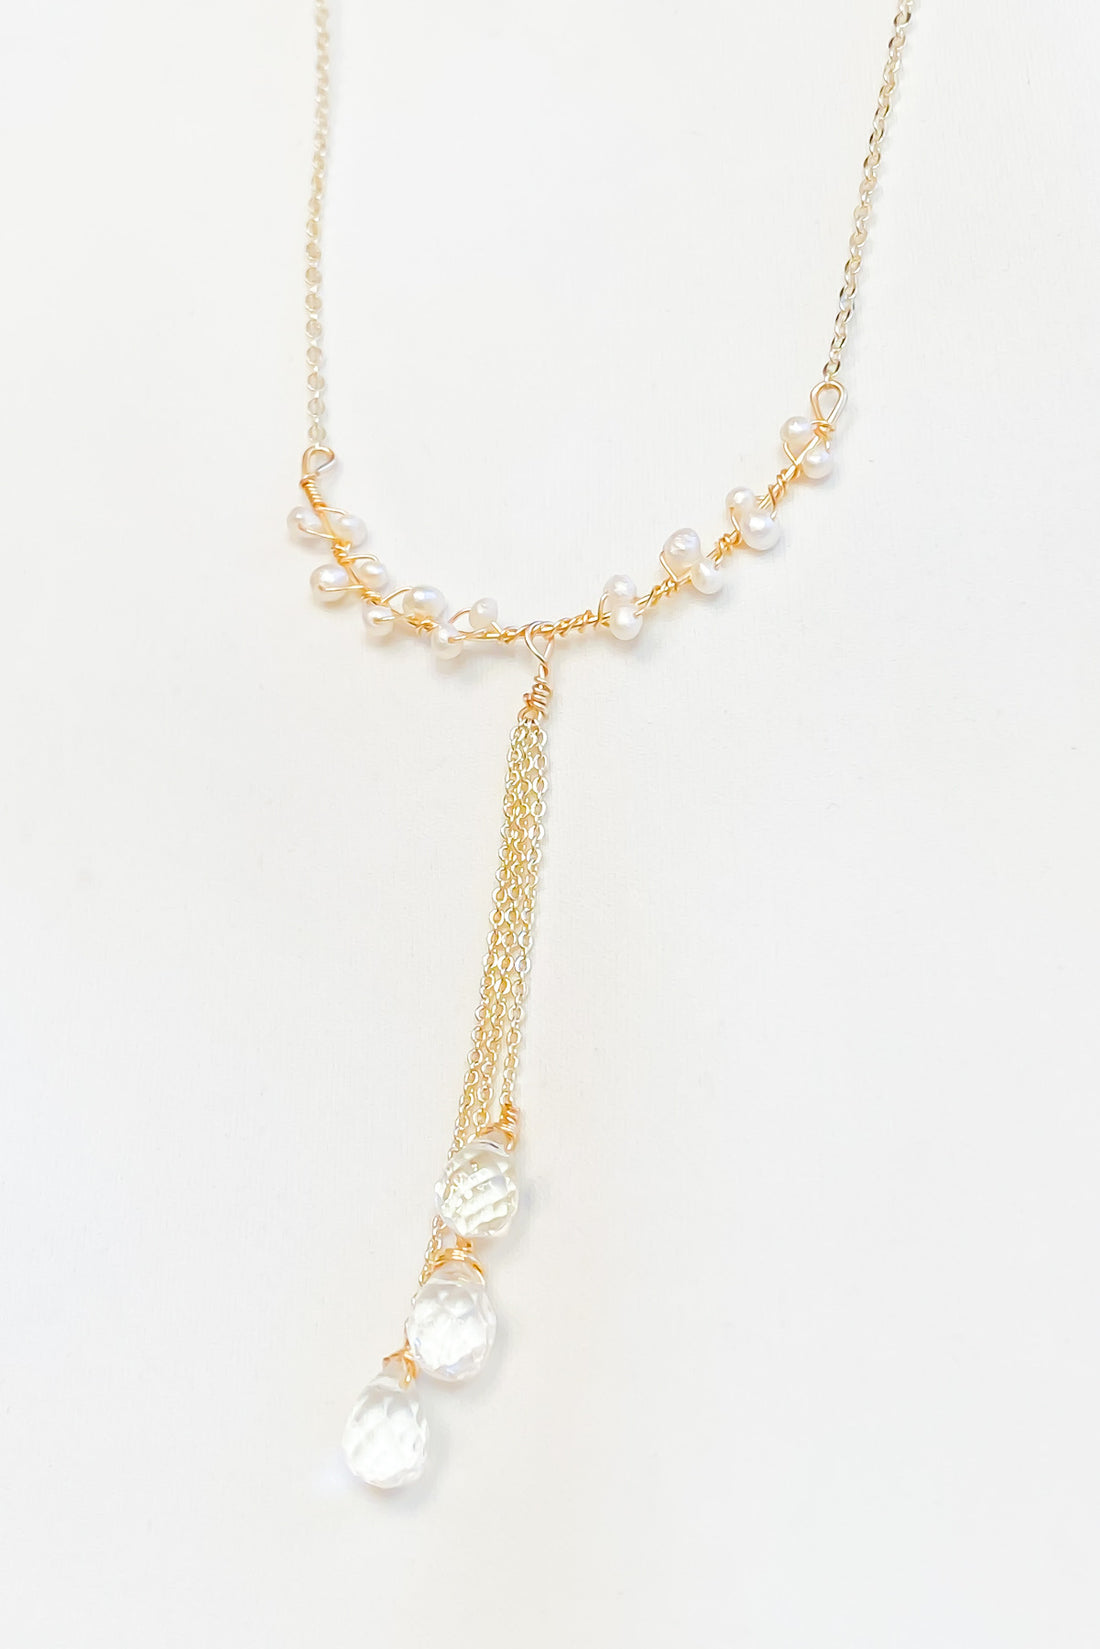 SKYE San Francisco Shop Chic Modern Elegant Classy Women Jewelry French Parisian Minimalist Anelise Gold Freshwater Pearl Necklace 3